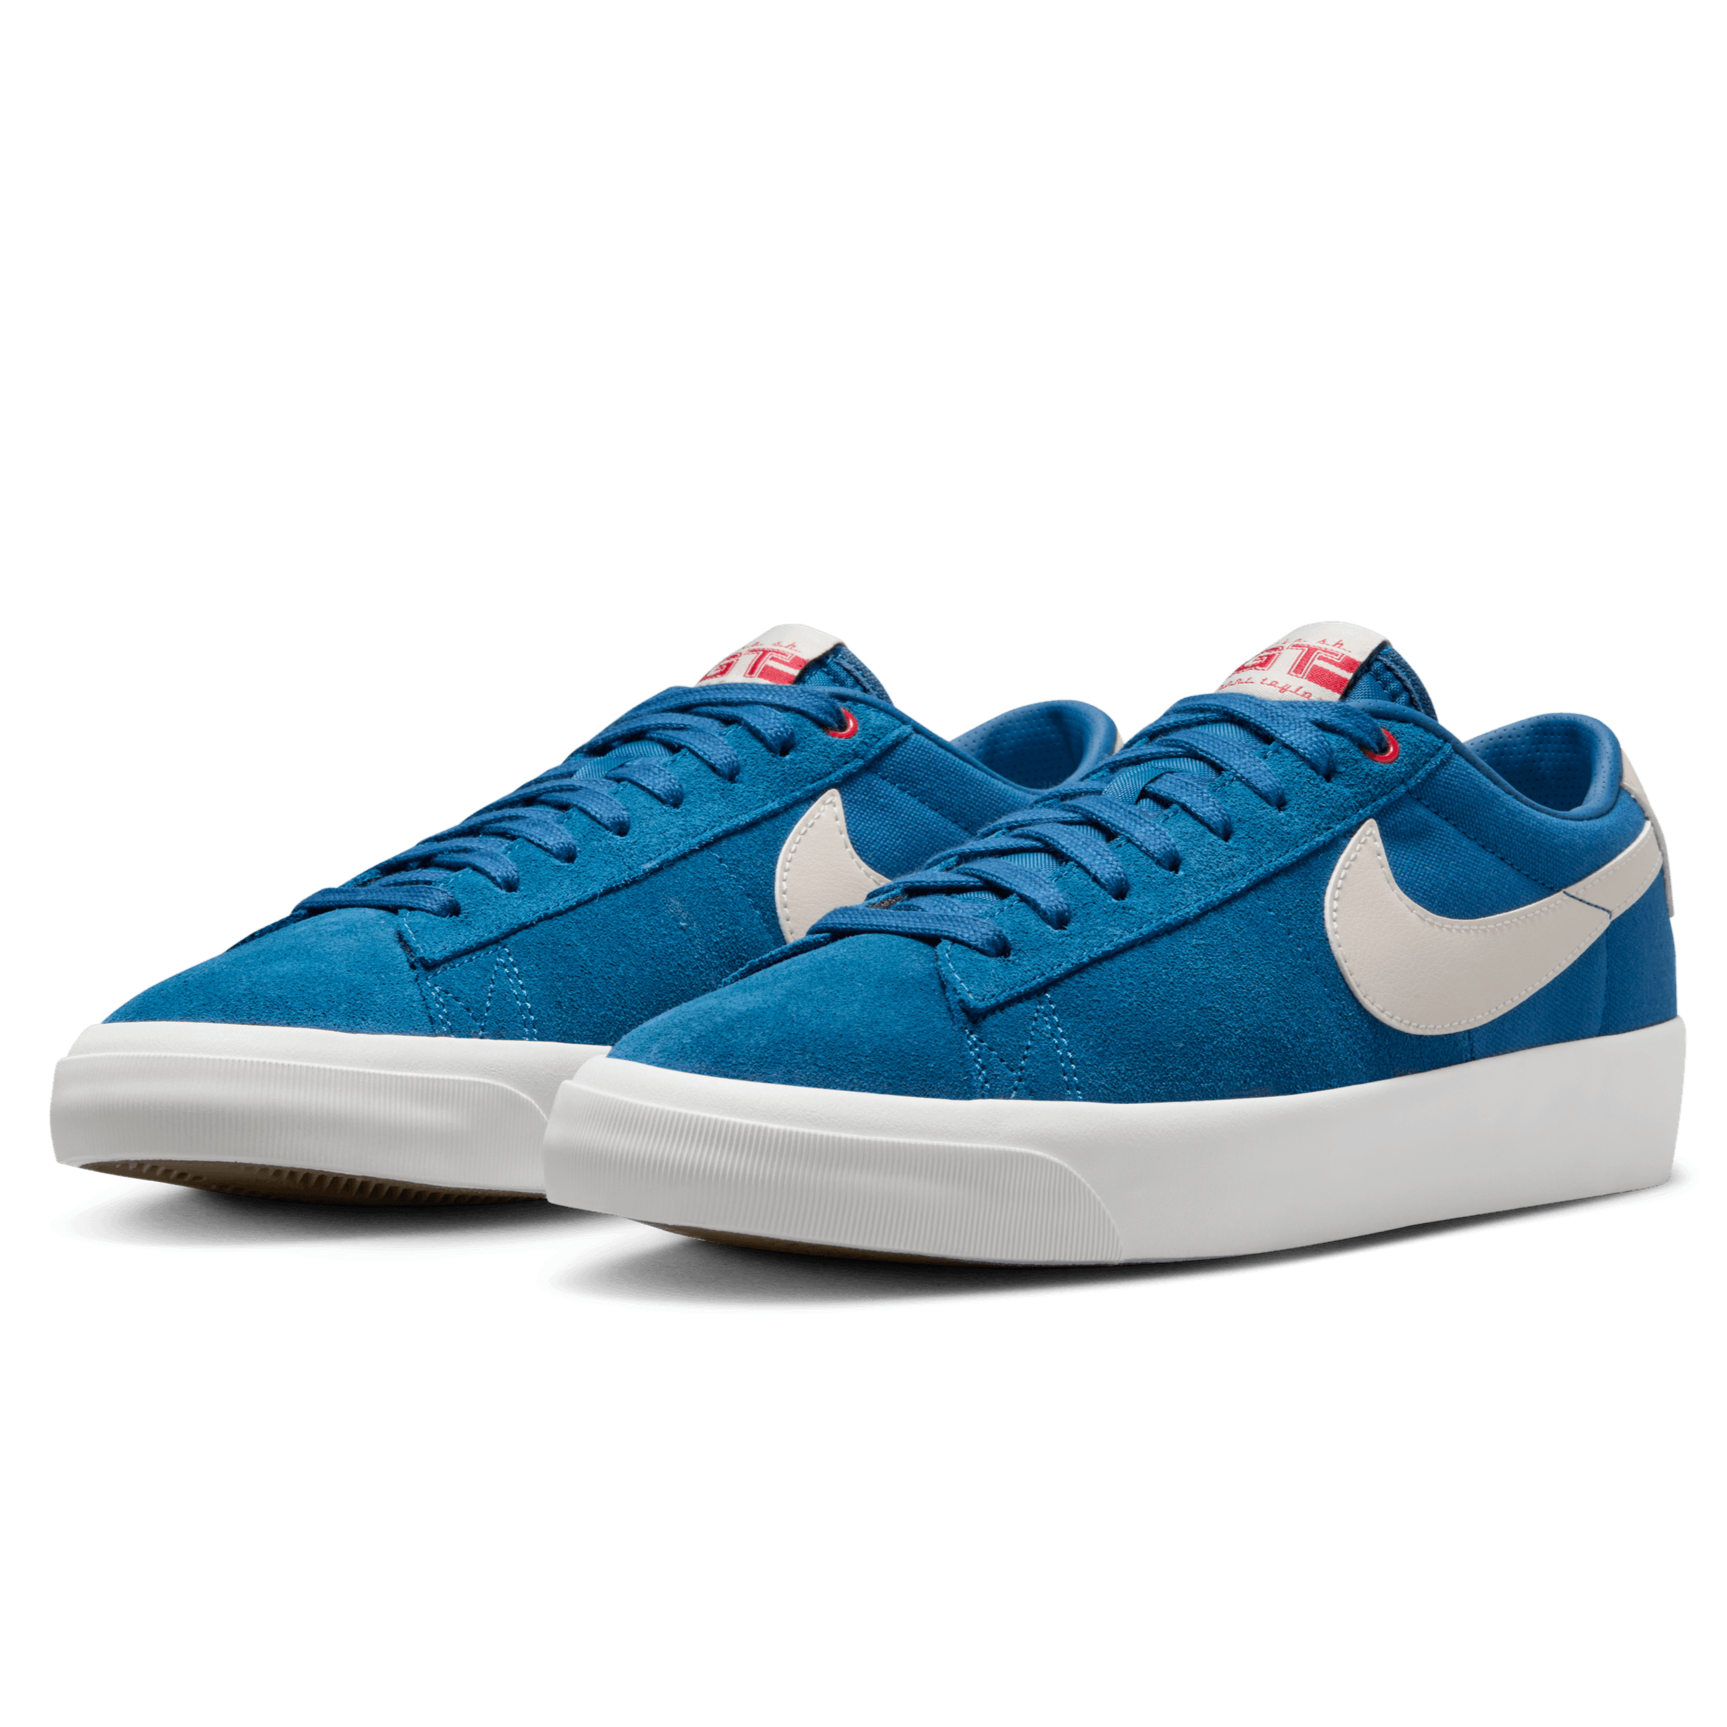 Court Blue GT Blazer Low Pro Nike SB Skate Shoe Front